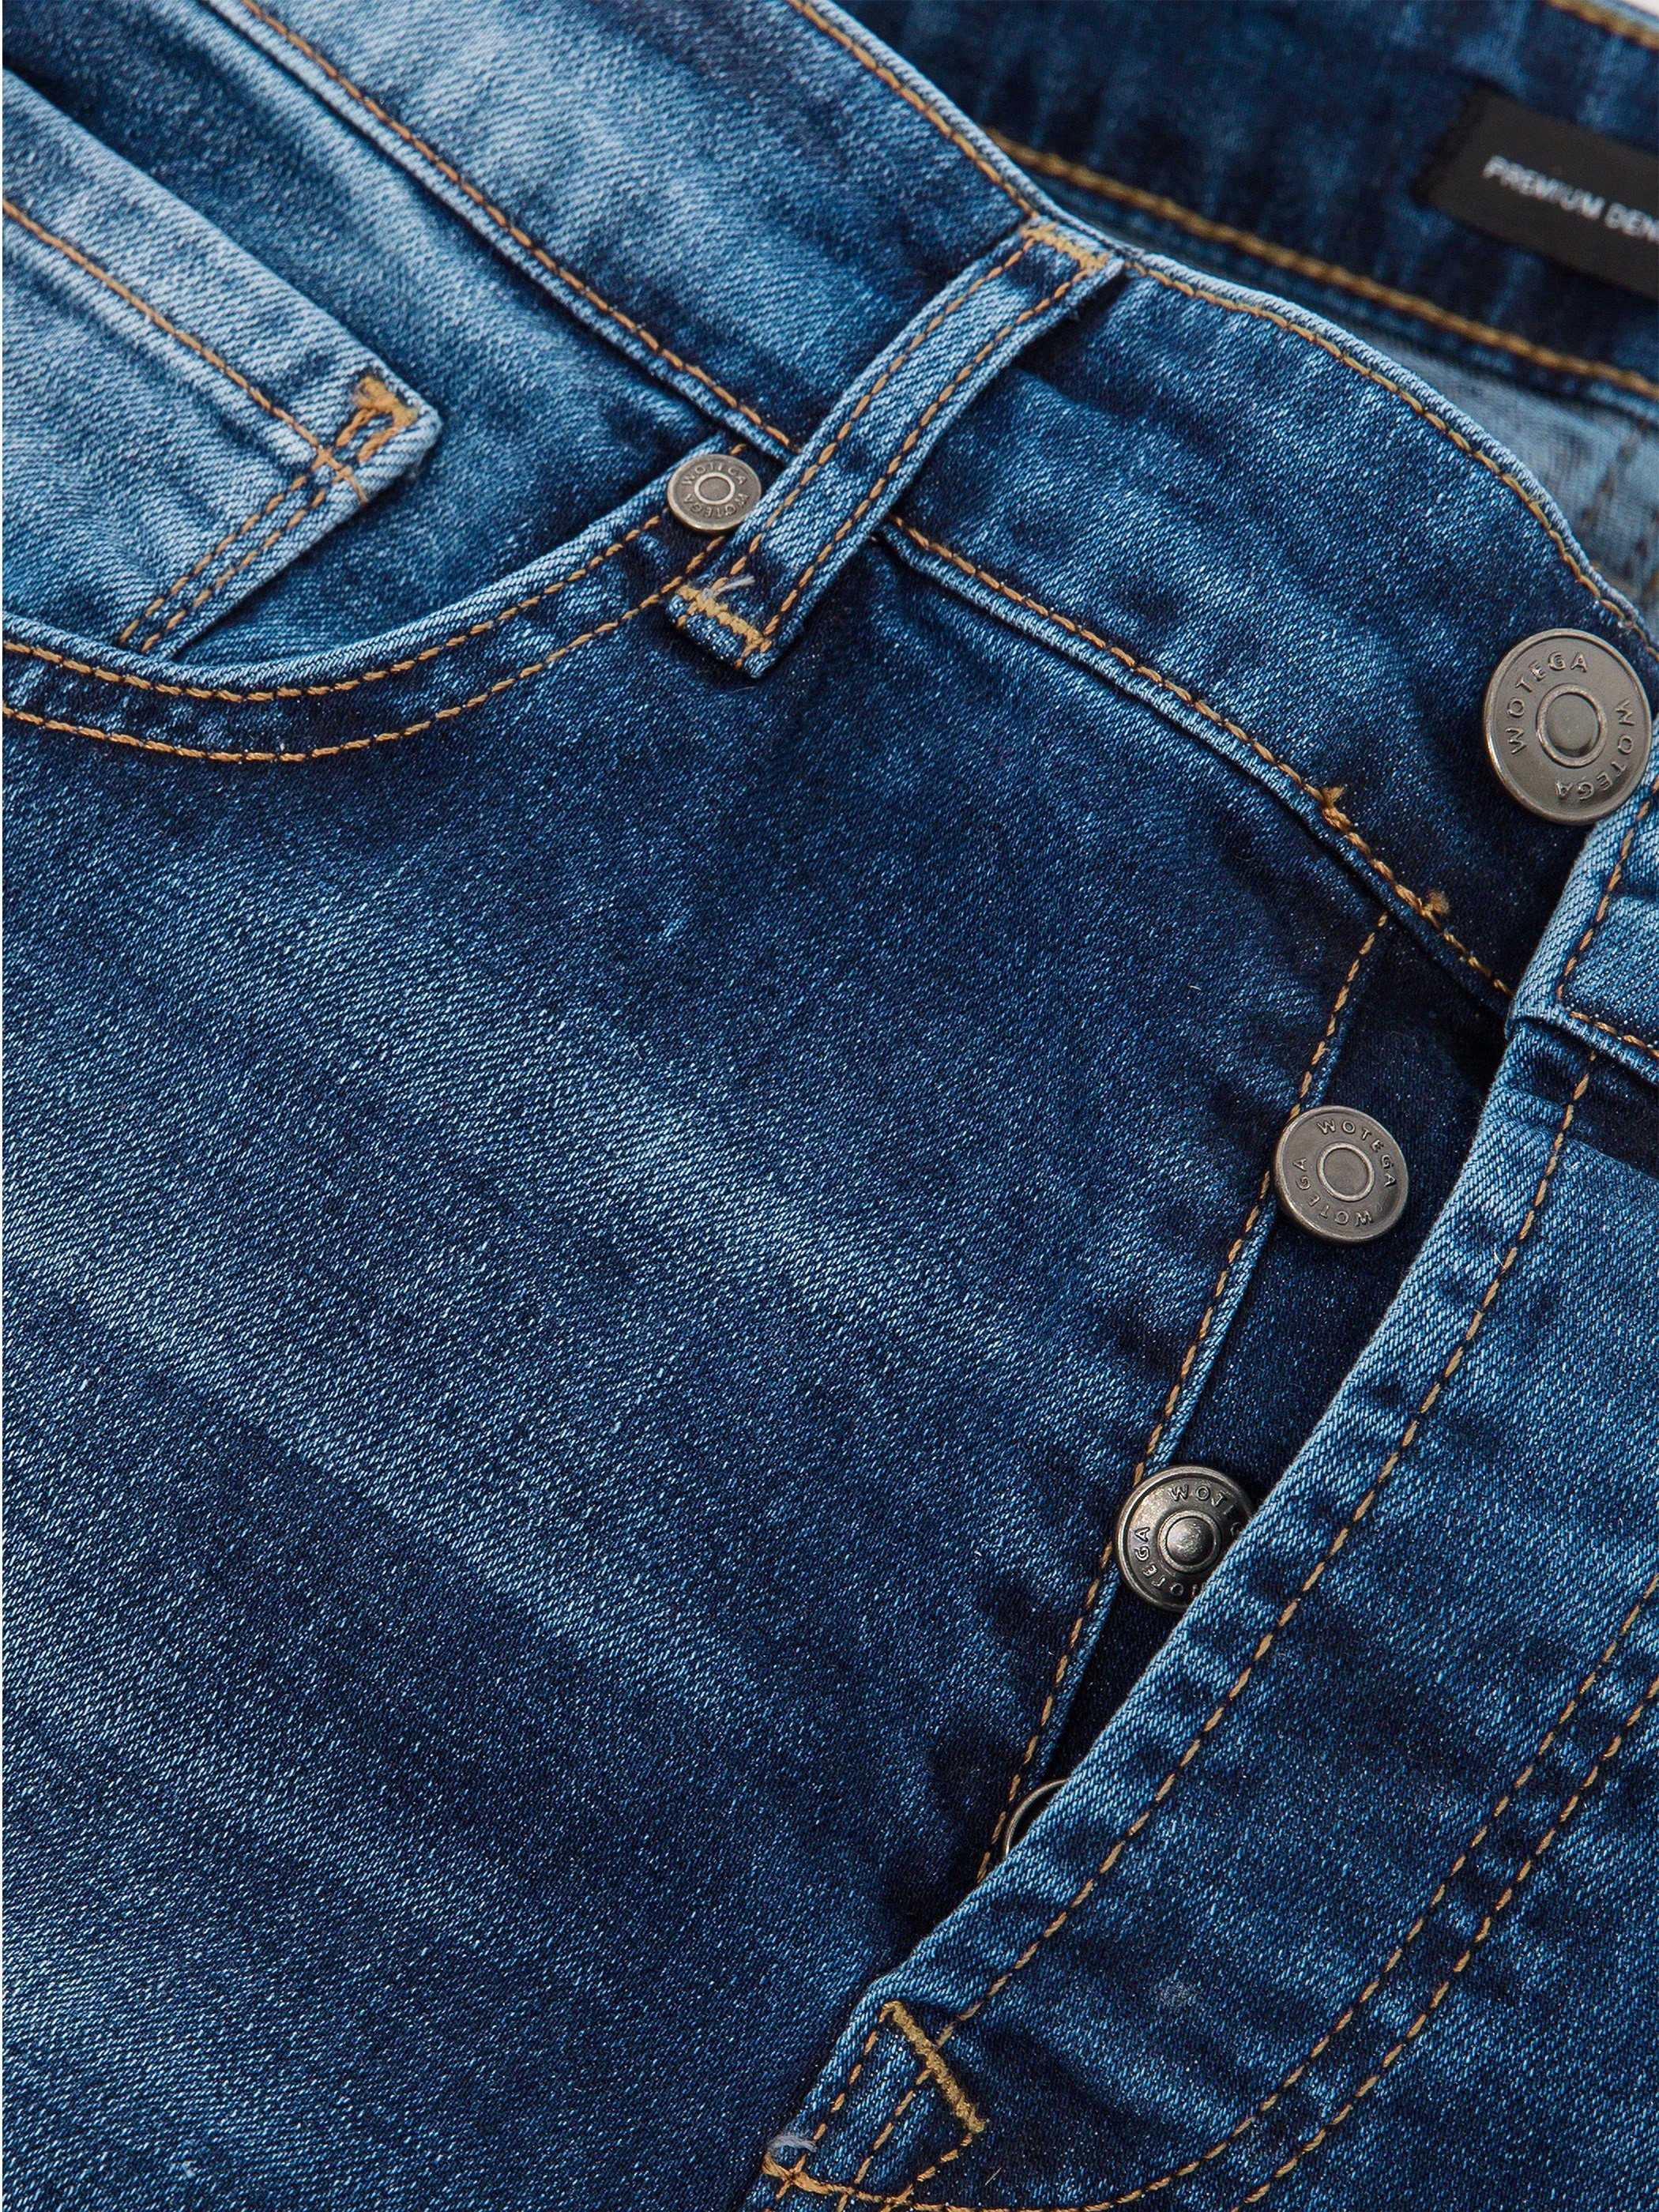 194028) Blau WOTEGA (insignia WOTEGA 5-Pocket-Style Rick Slim-fit-Jeans Jeans - blue